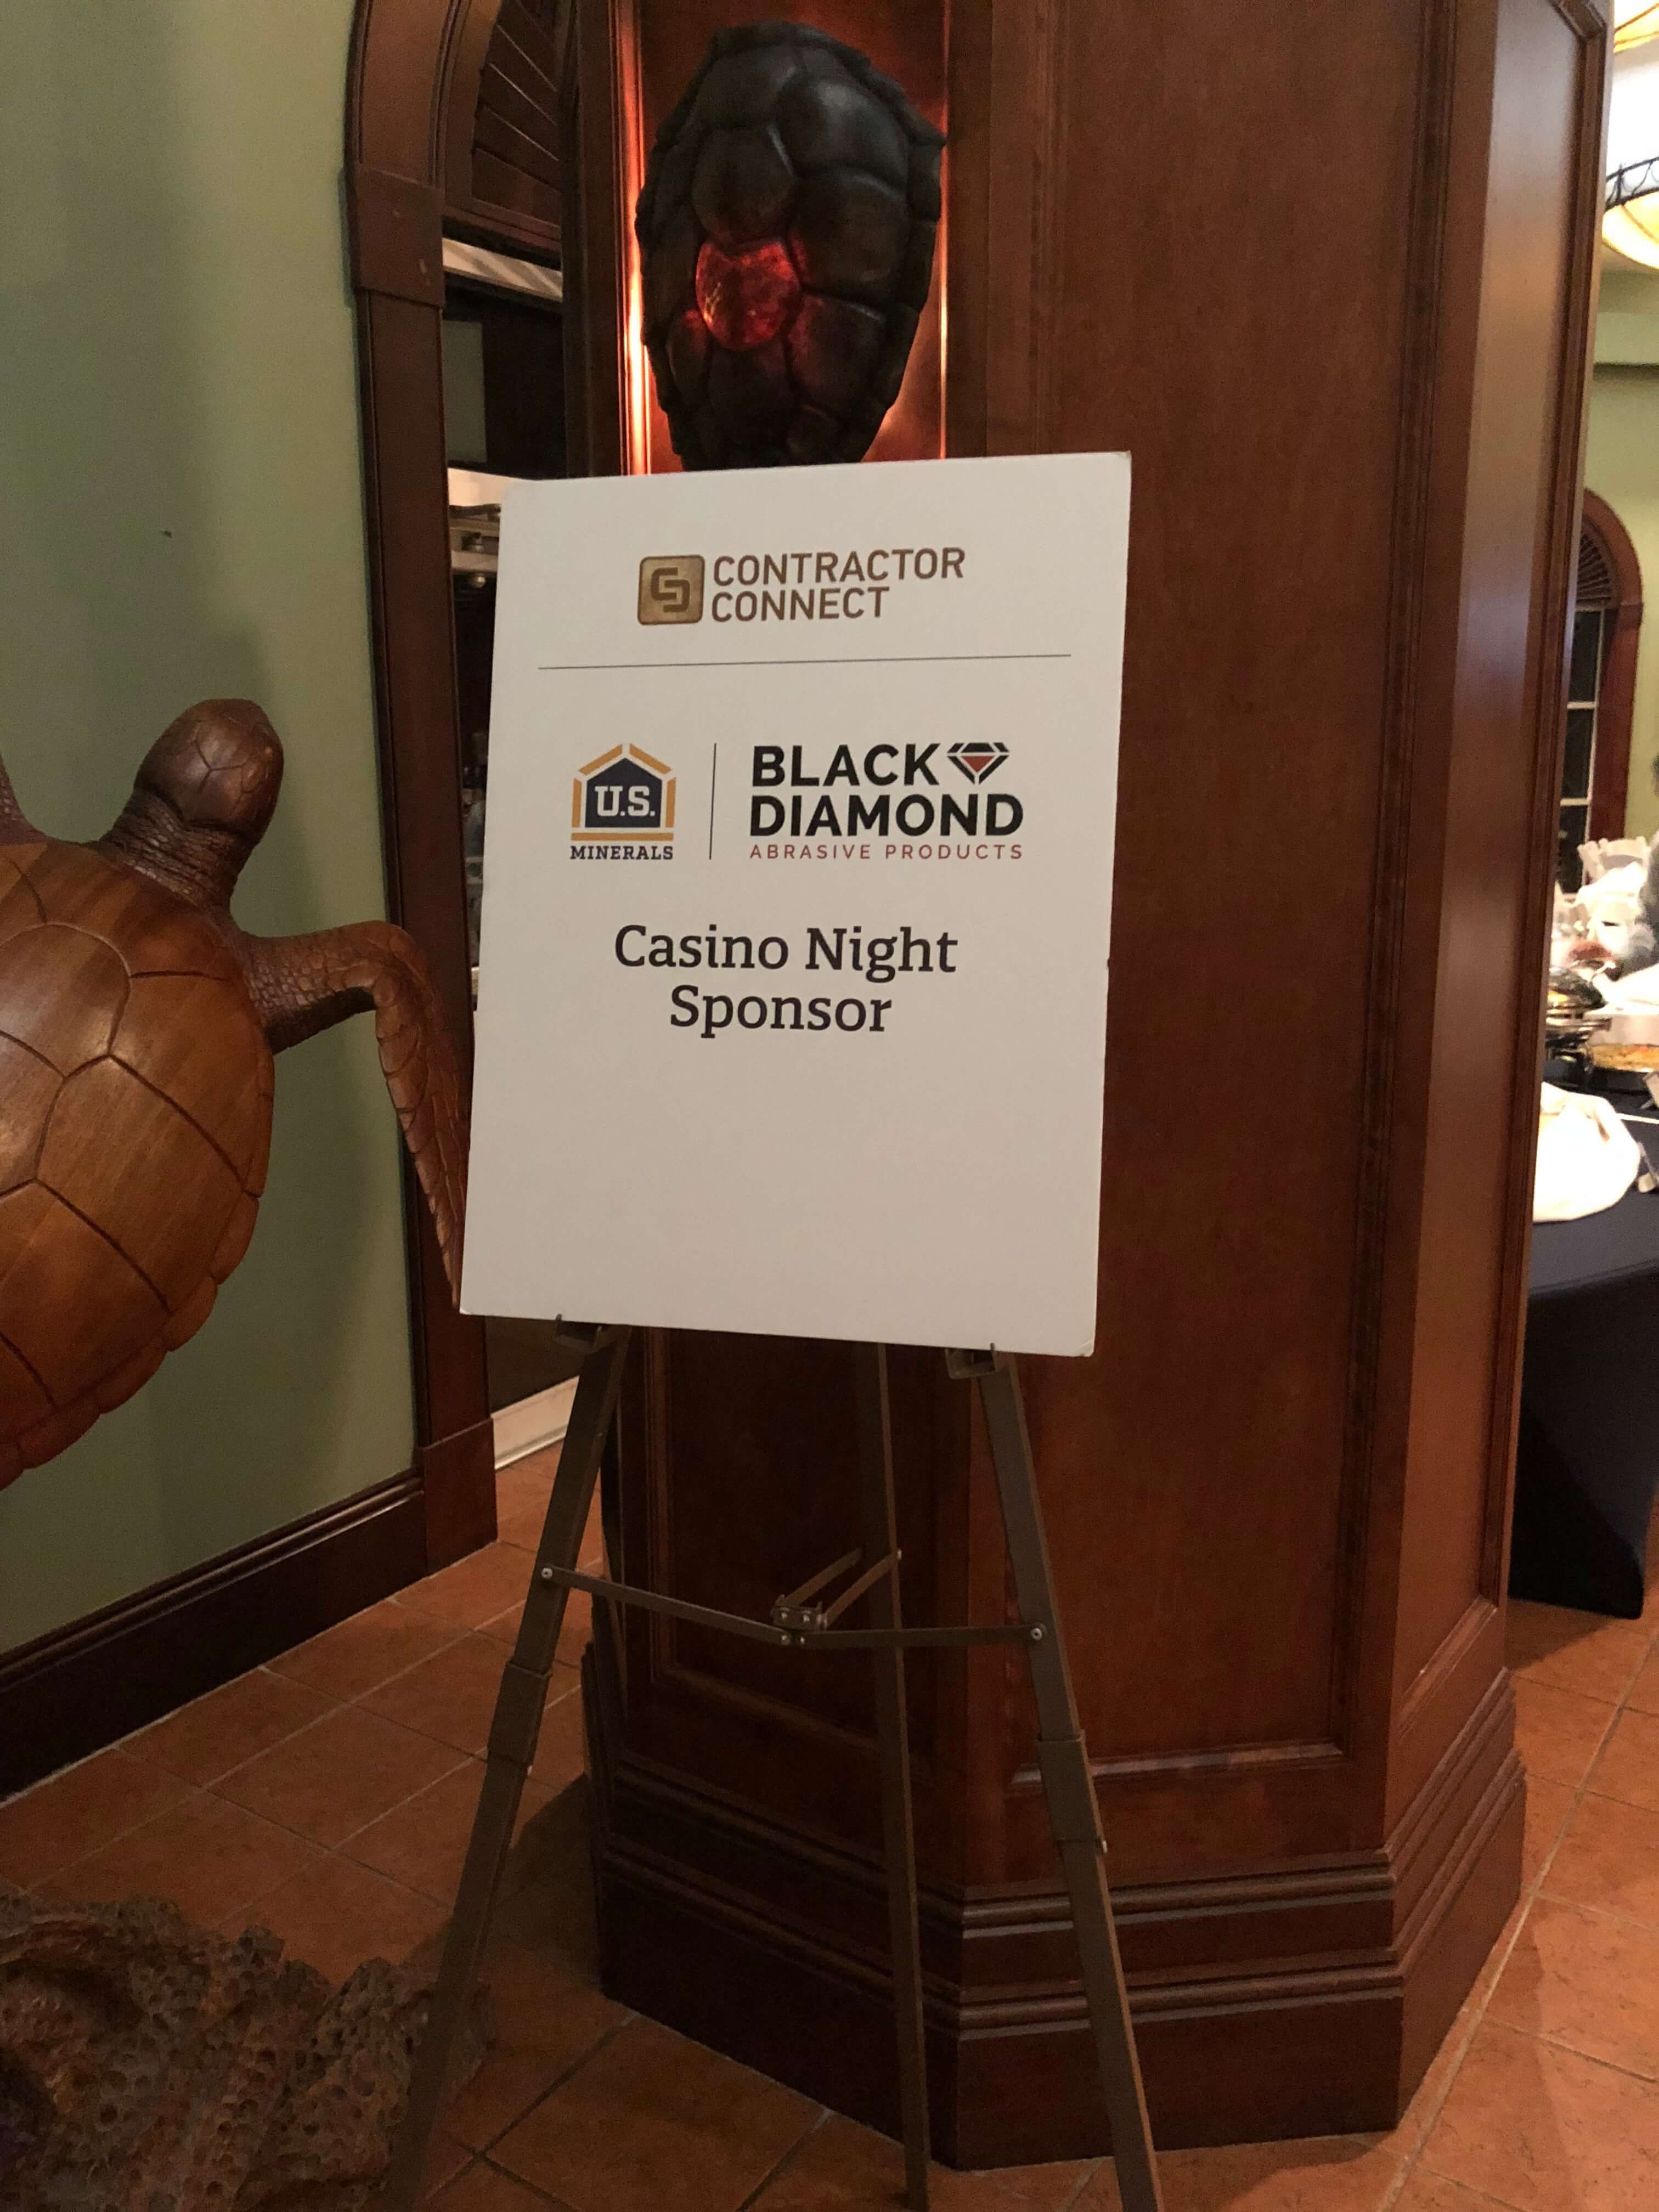 Black Diamond Sponsors Casino Night at Contractor Connect